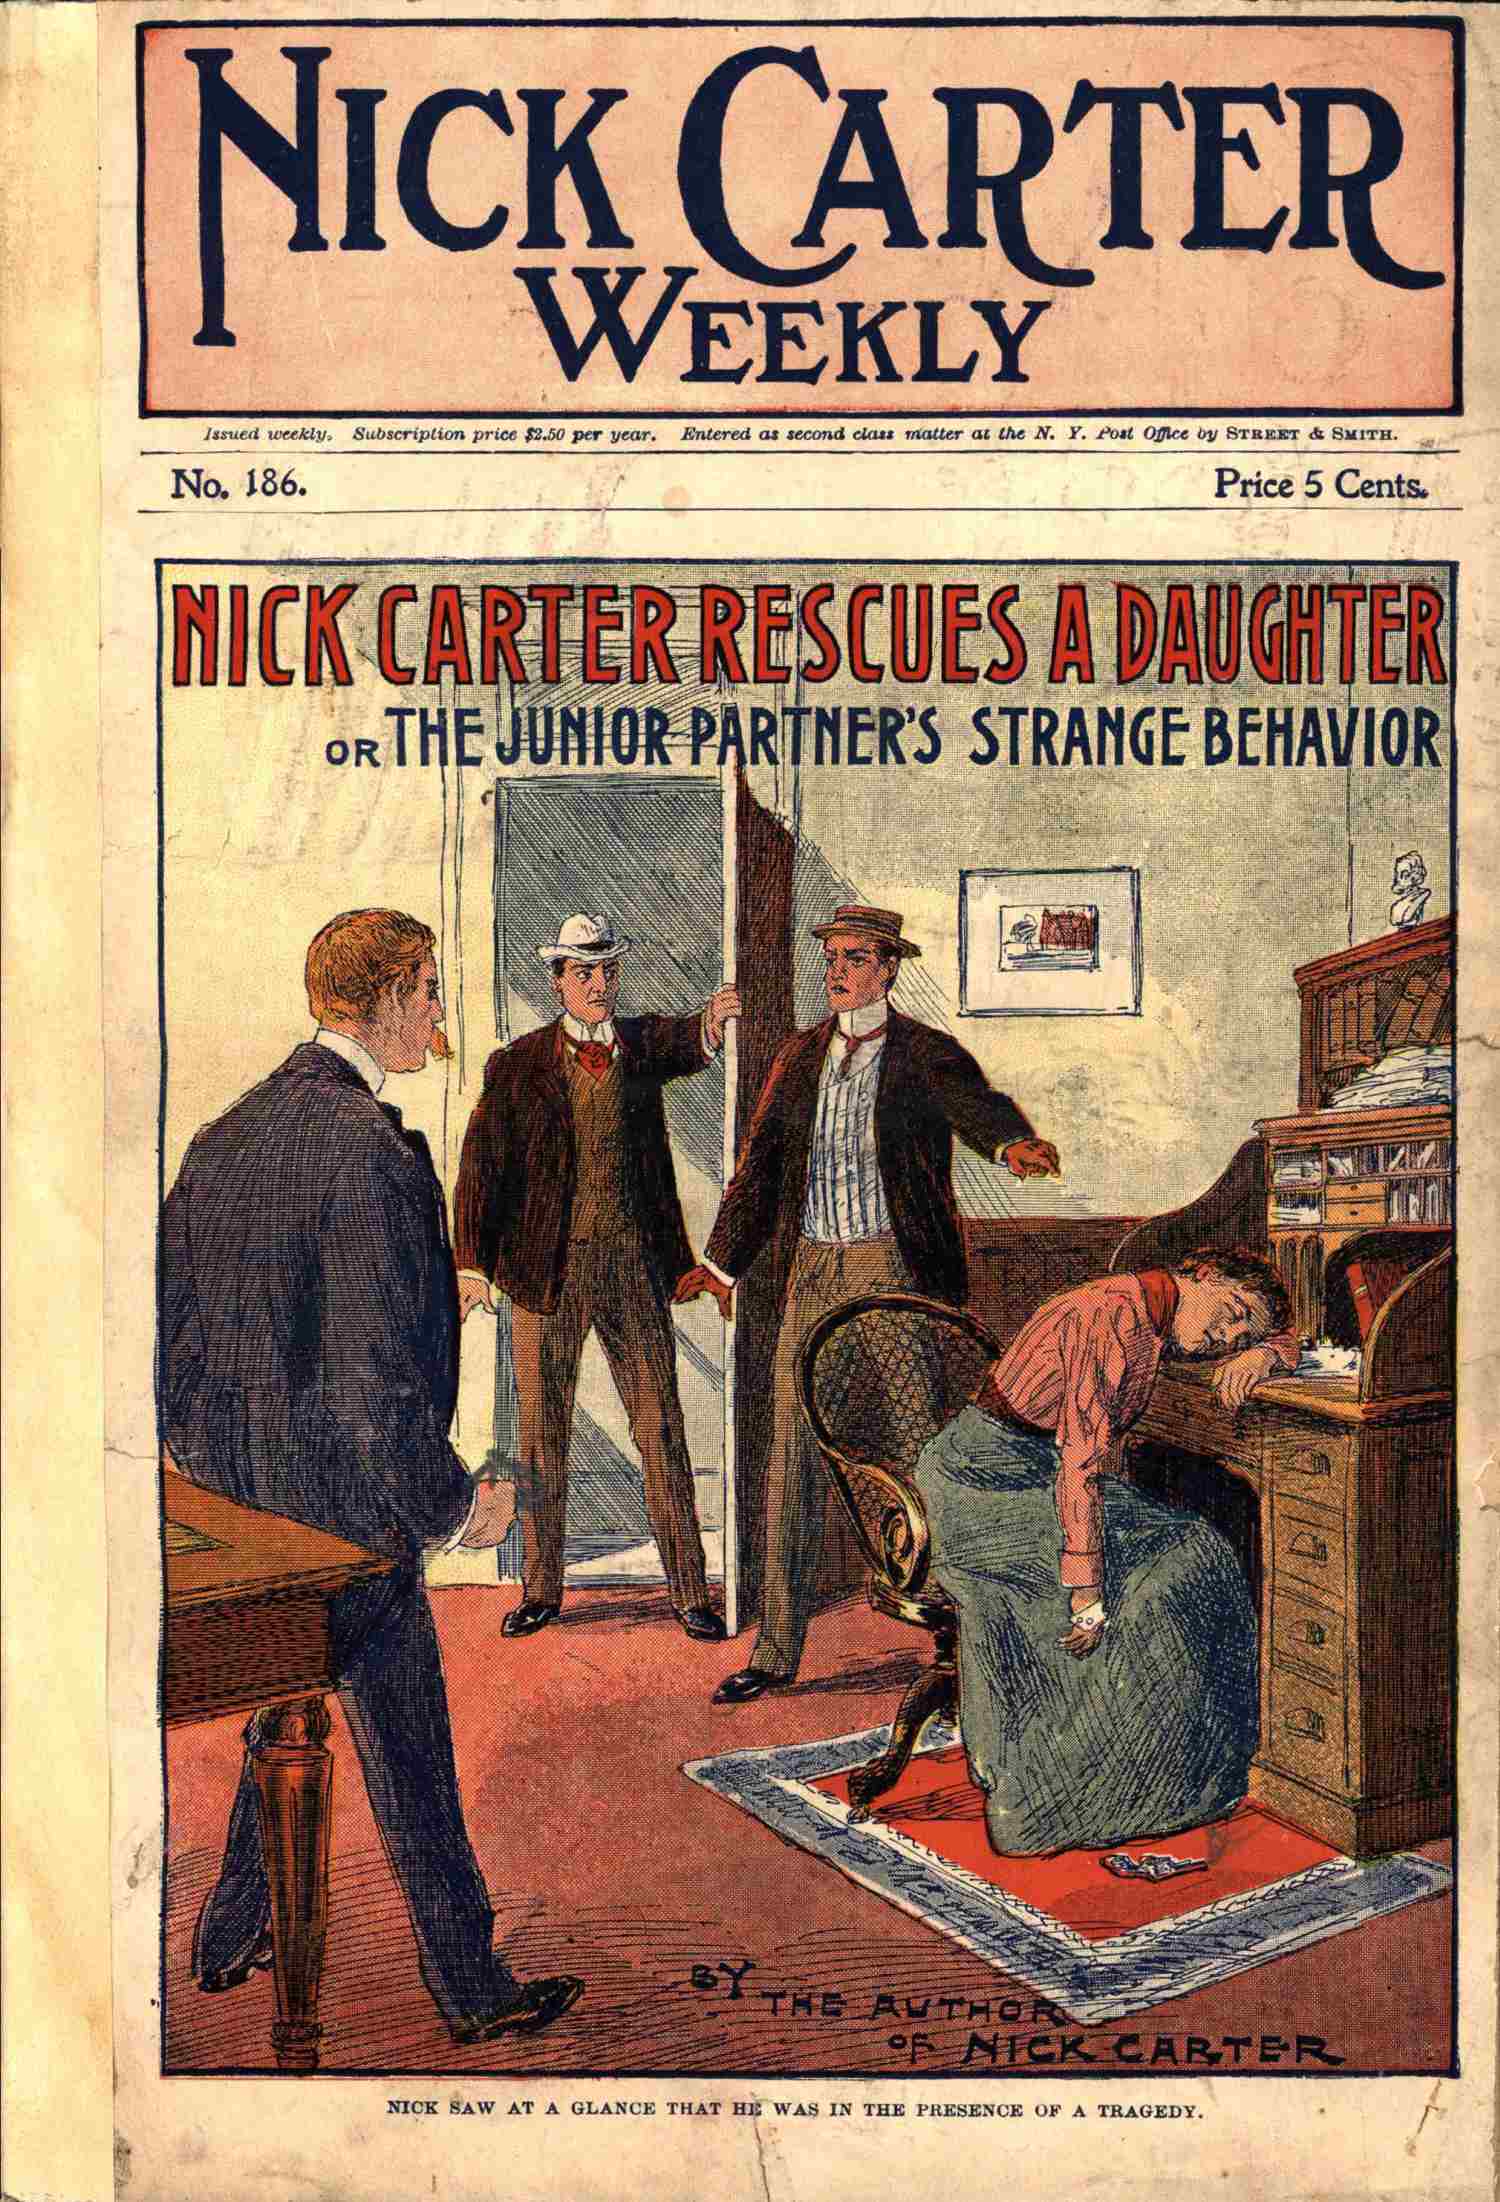 Nick Carter weekly  No. 186, July 21, 1900: Nick Carter rescues a daughter; or, The junior partner's strange behavior.